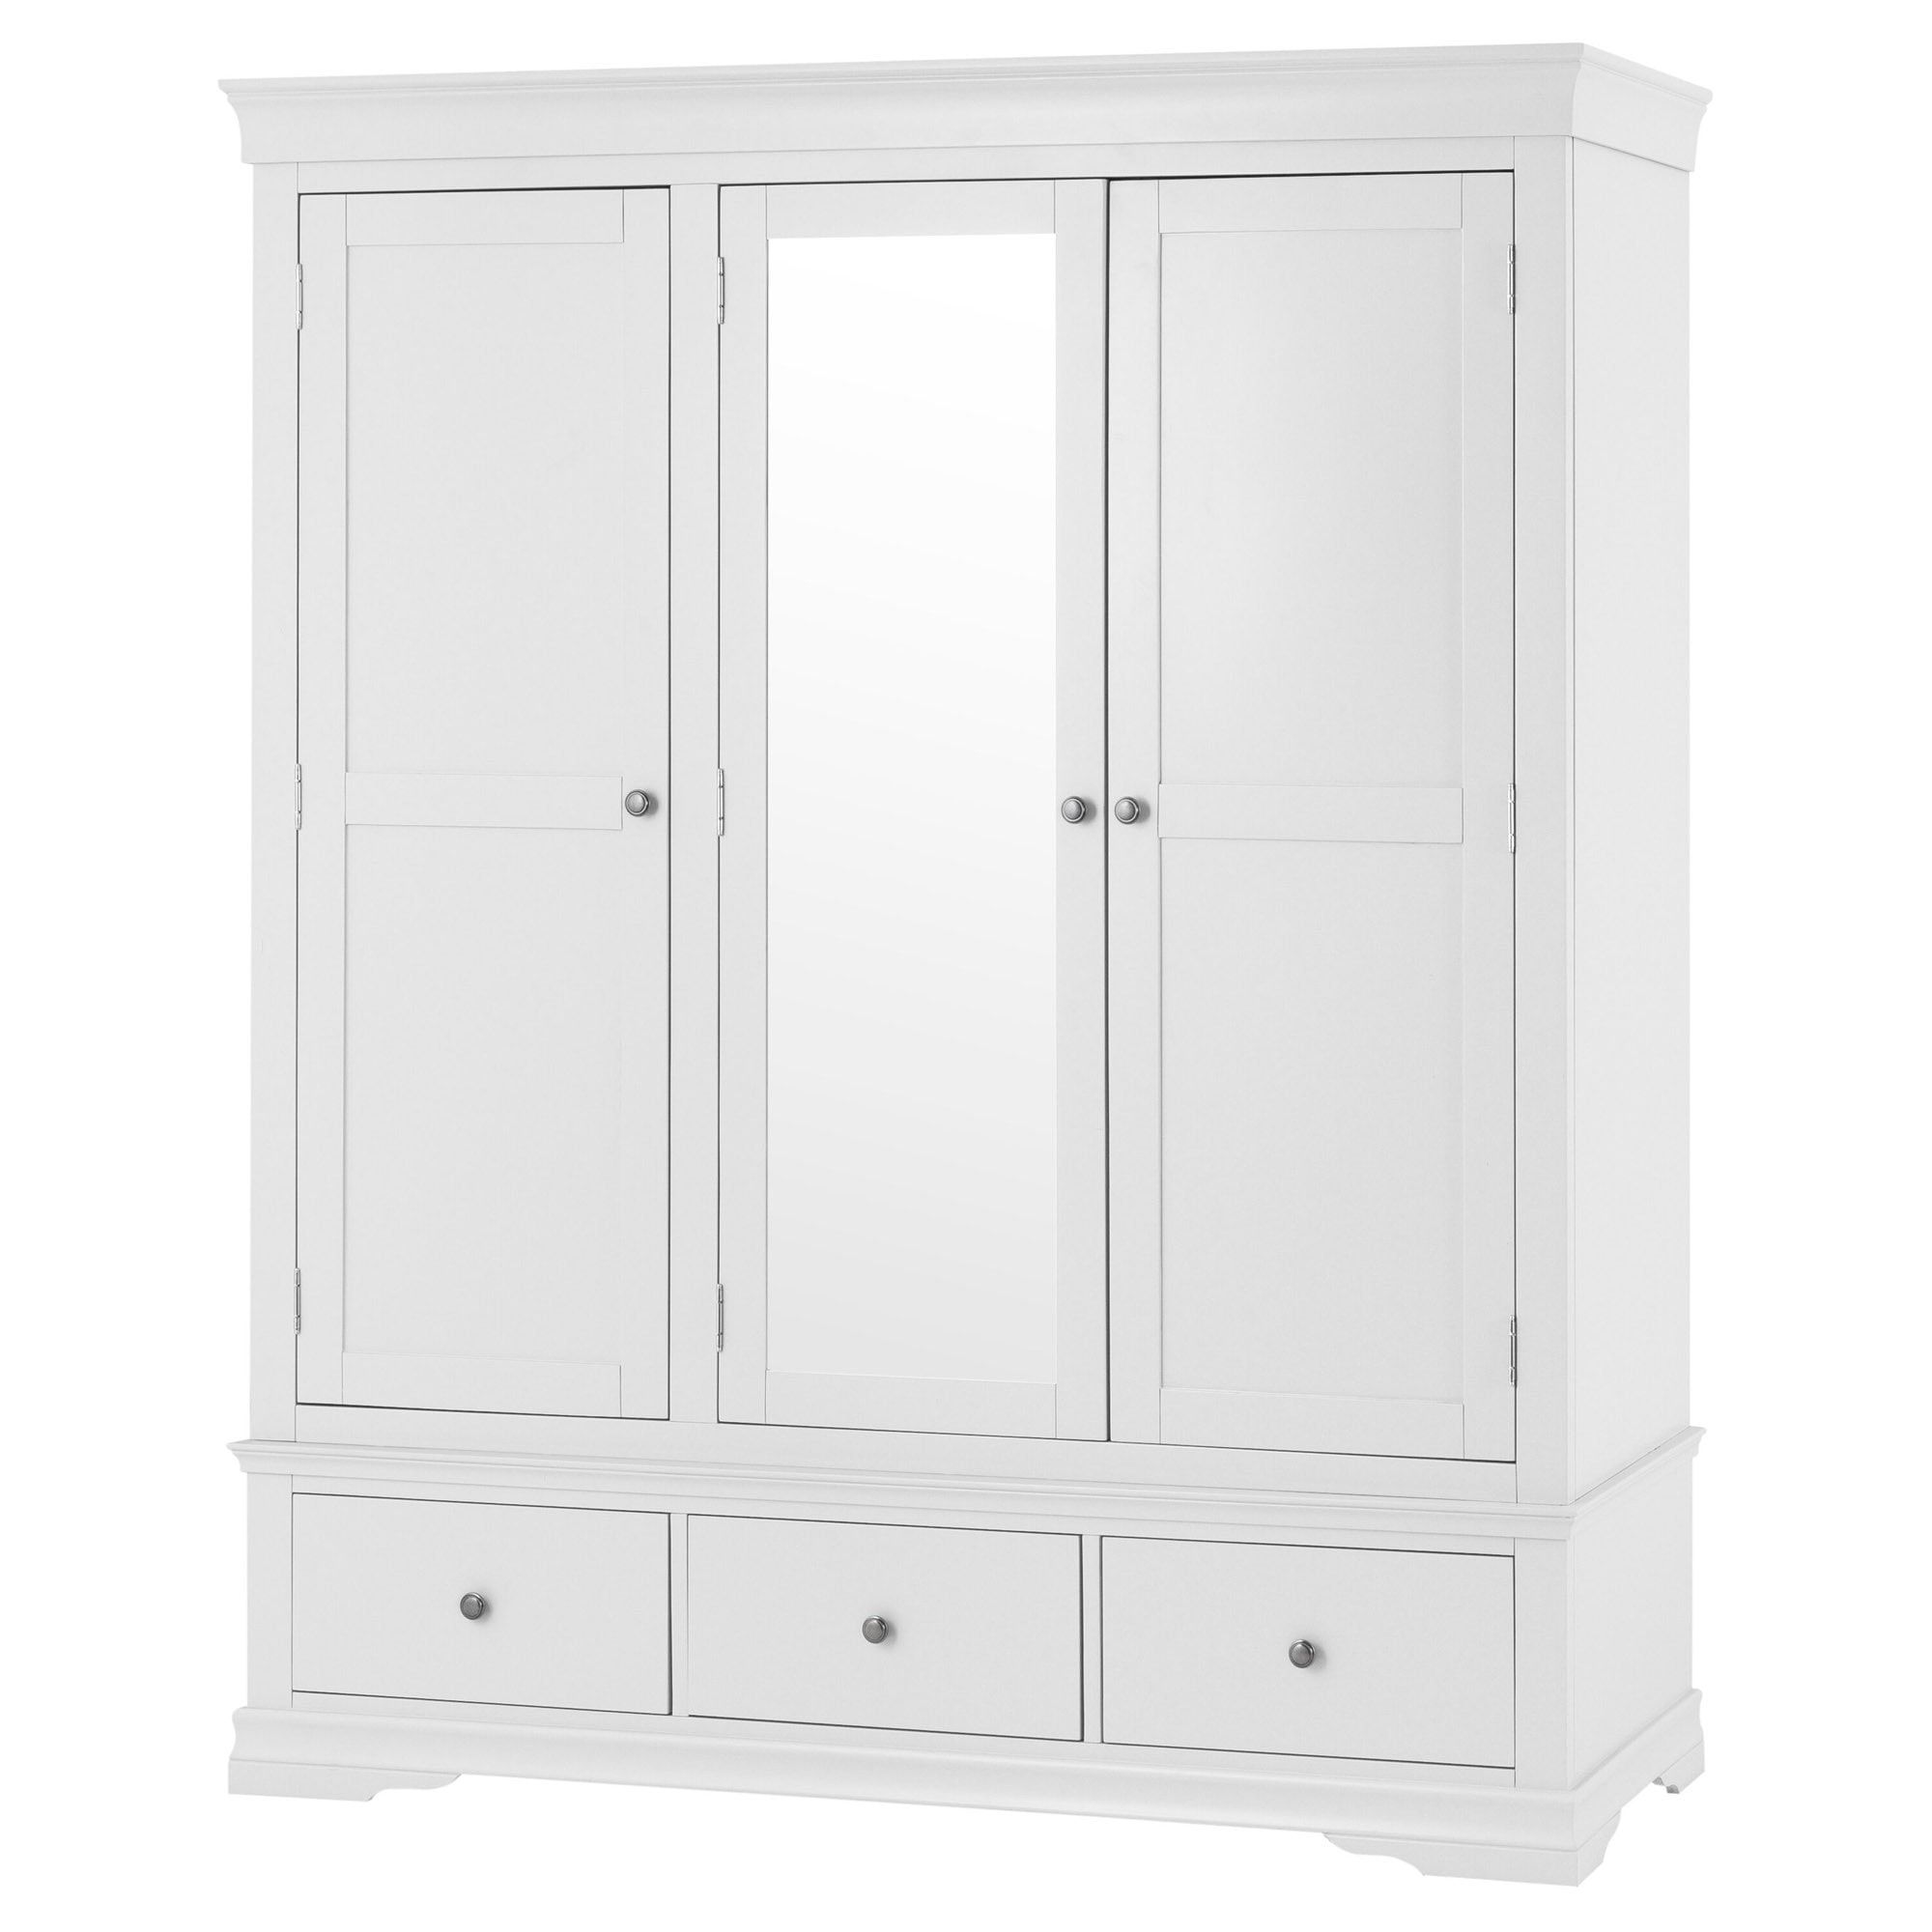 Swindon White 3 Door 3 Drawer Wardrobe | White Wardrobe | White Wooden  Wardrobe Throughout White 3 Door Wardrobes With Drawers (Gallery 1 of 20)